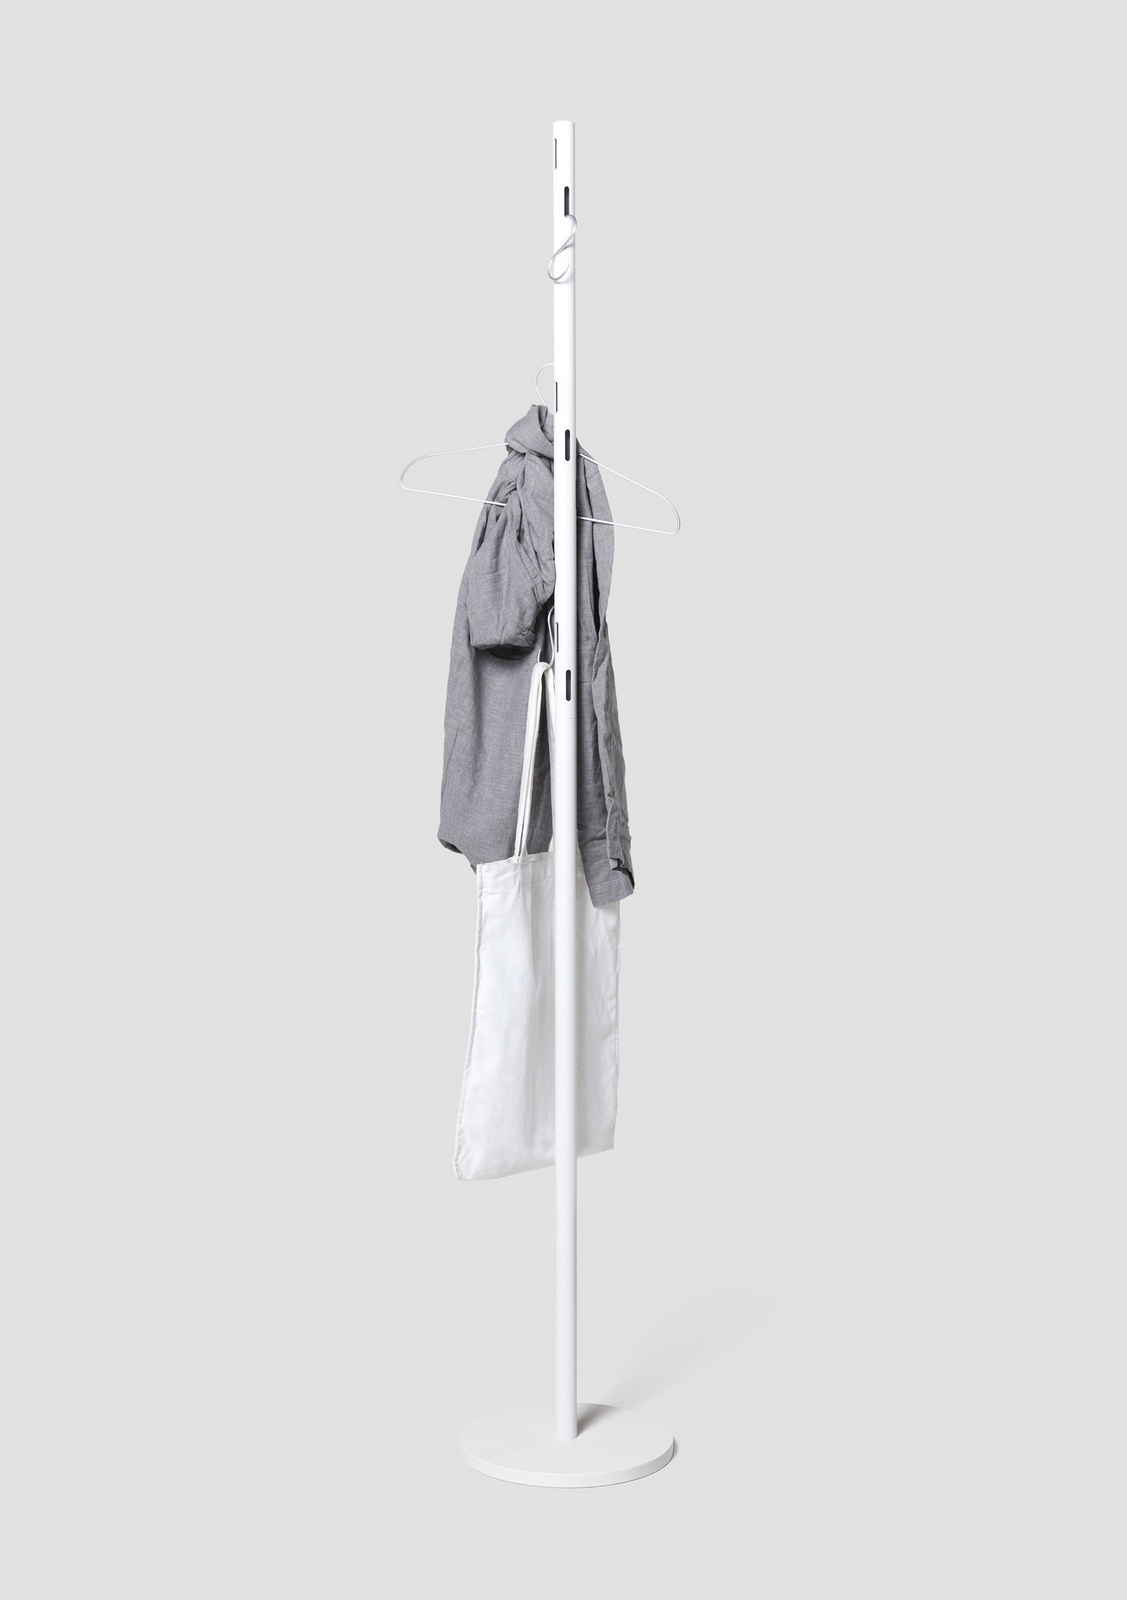 Poto hanger pole Stéfanie Kay Design Muji Ecal clothes rack coat hanger simple minimalist hook design week milan